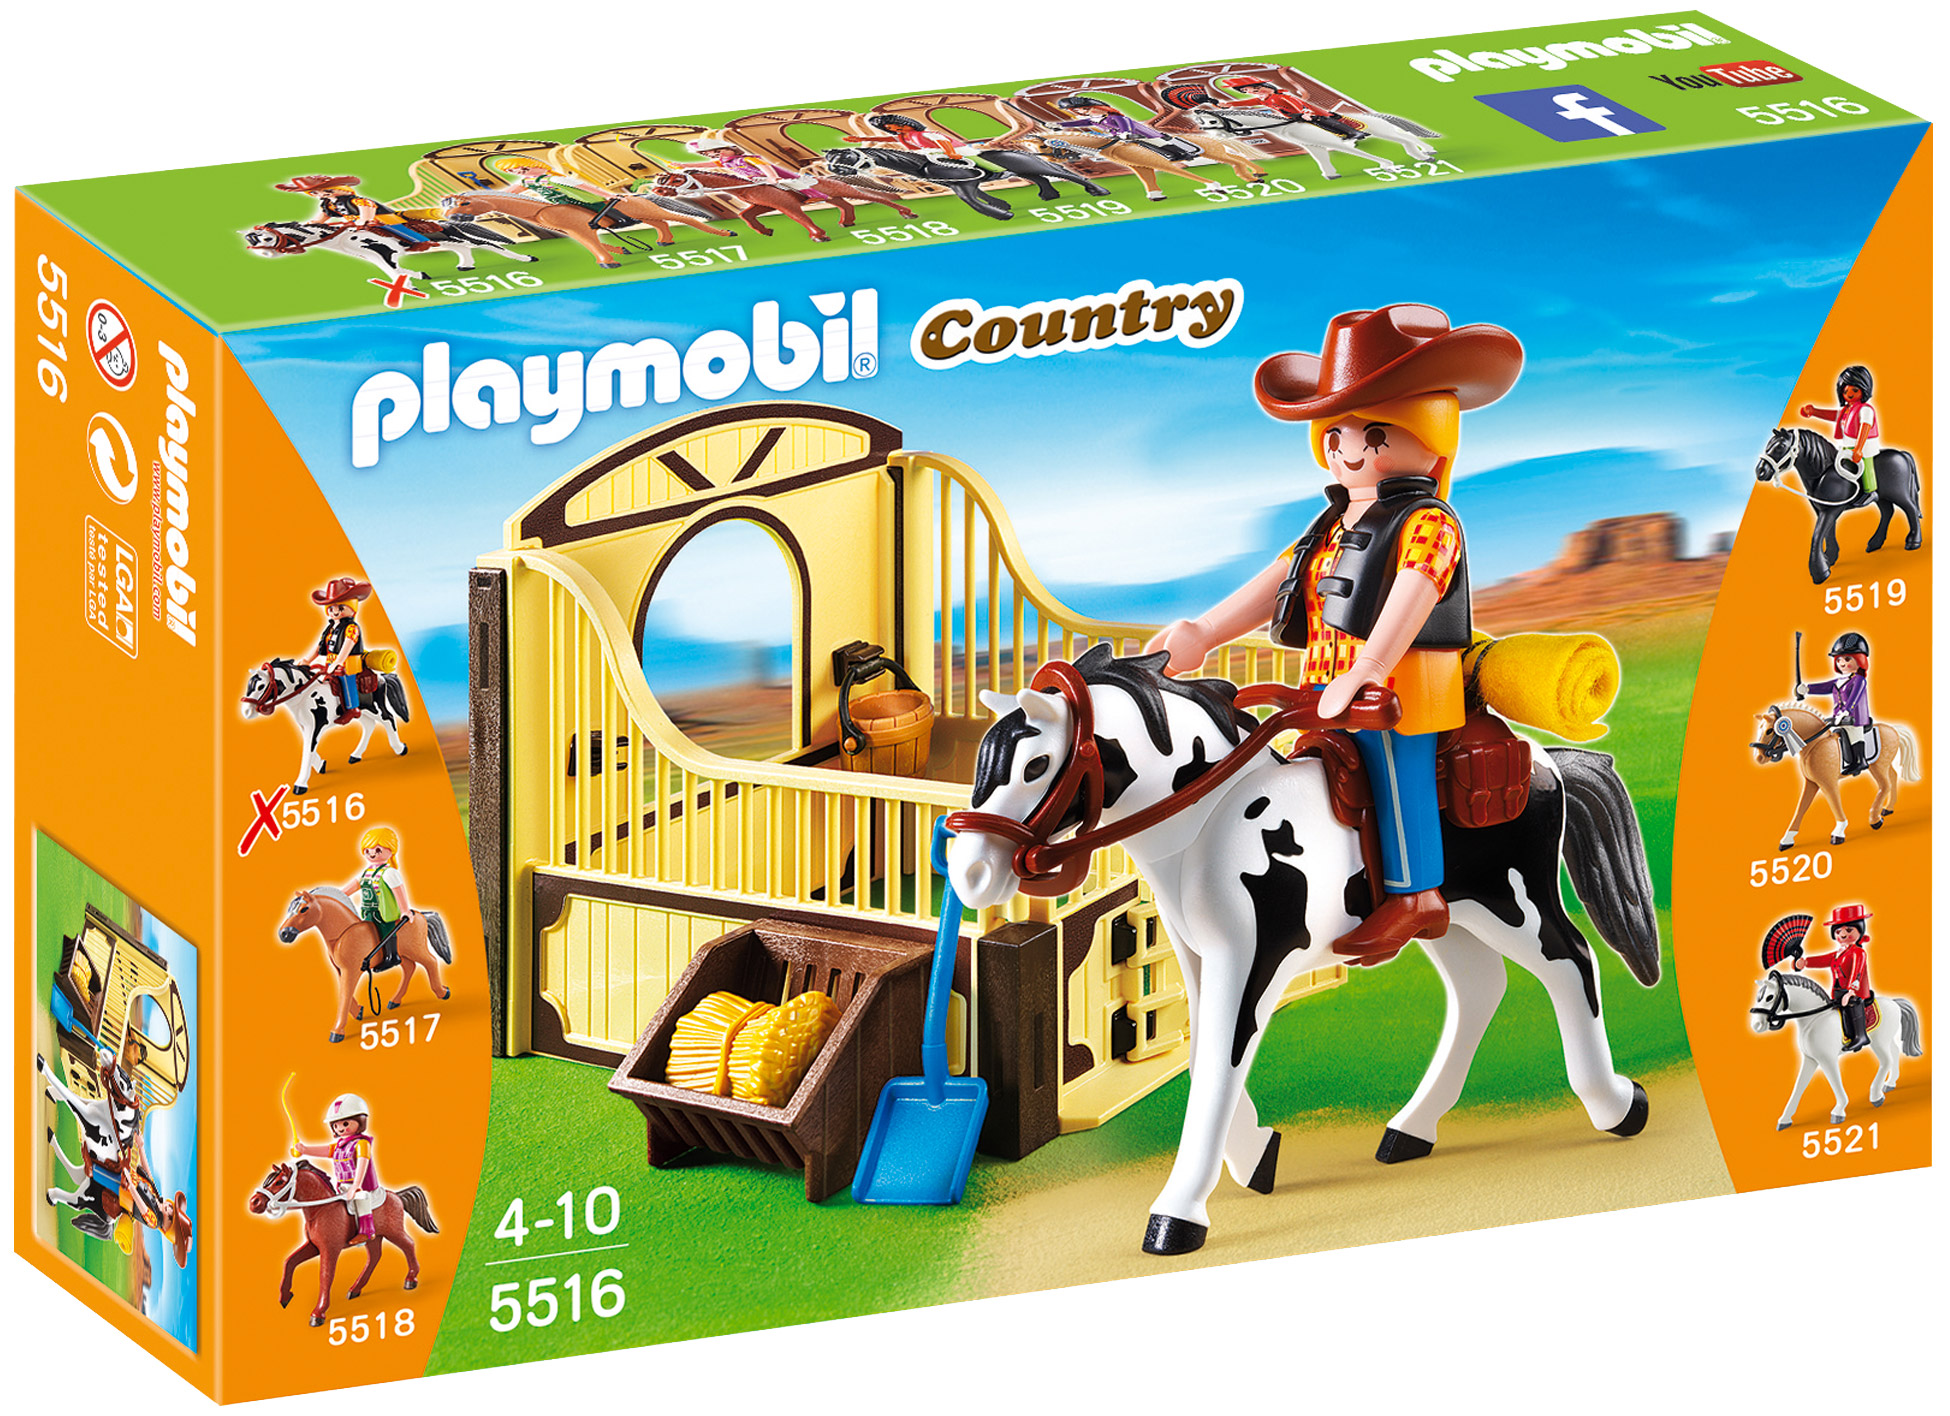 Playmobil Country 5516 pas cher, Cheval et aventurière